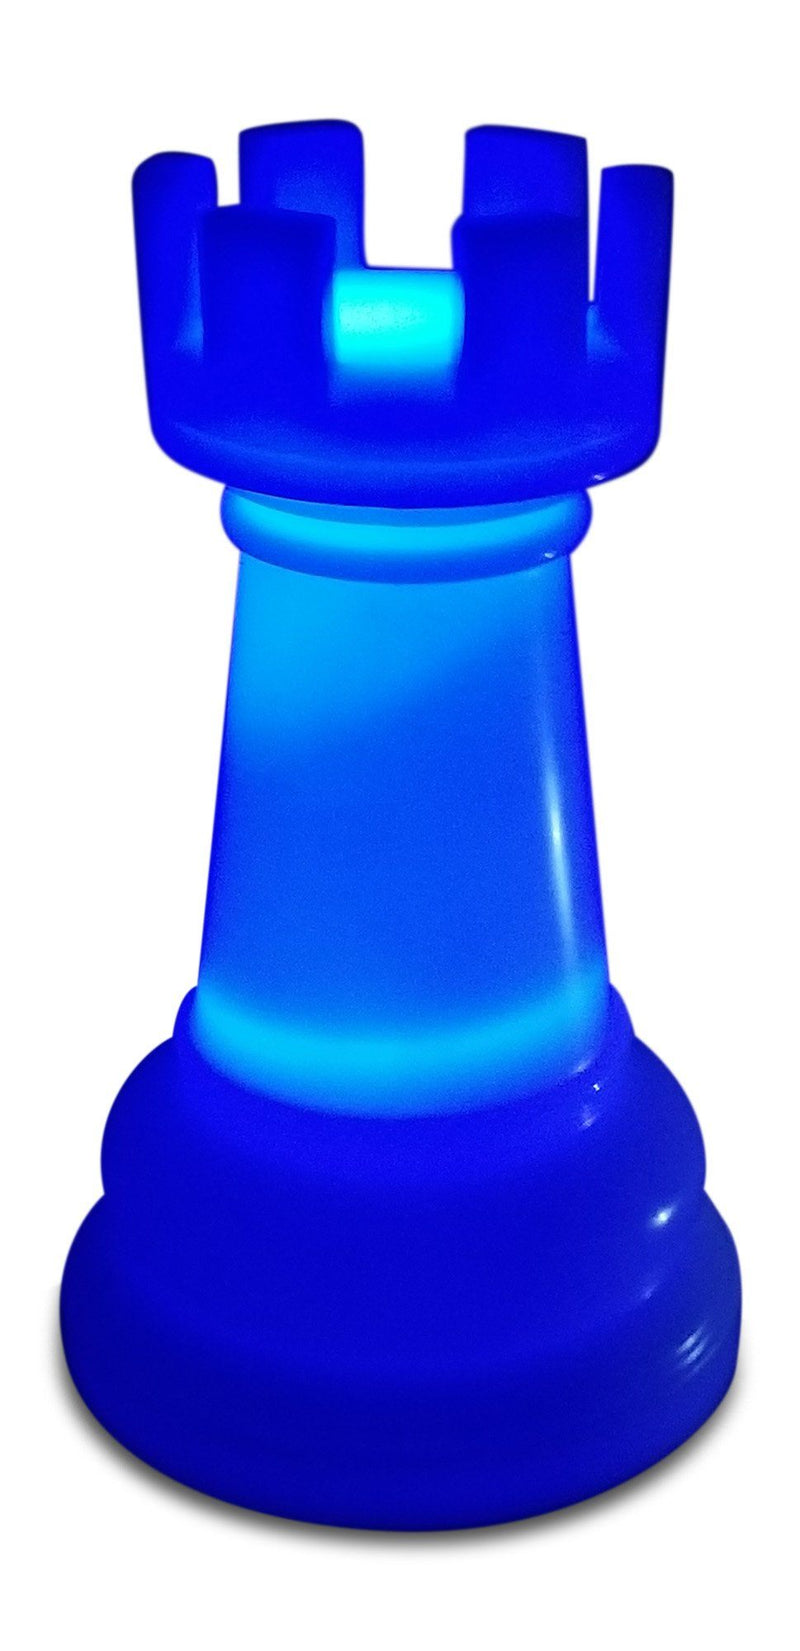 MegaChess 14 Inch Perfect Rook Light-Up Giant Chess Piece - Blue |  | MegaChess.com